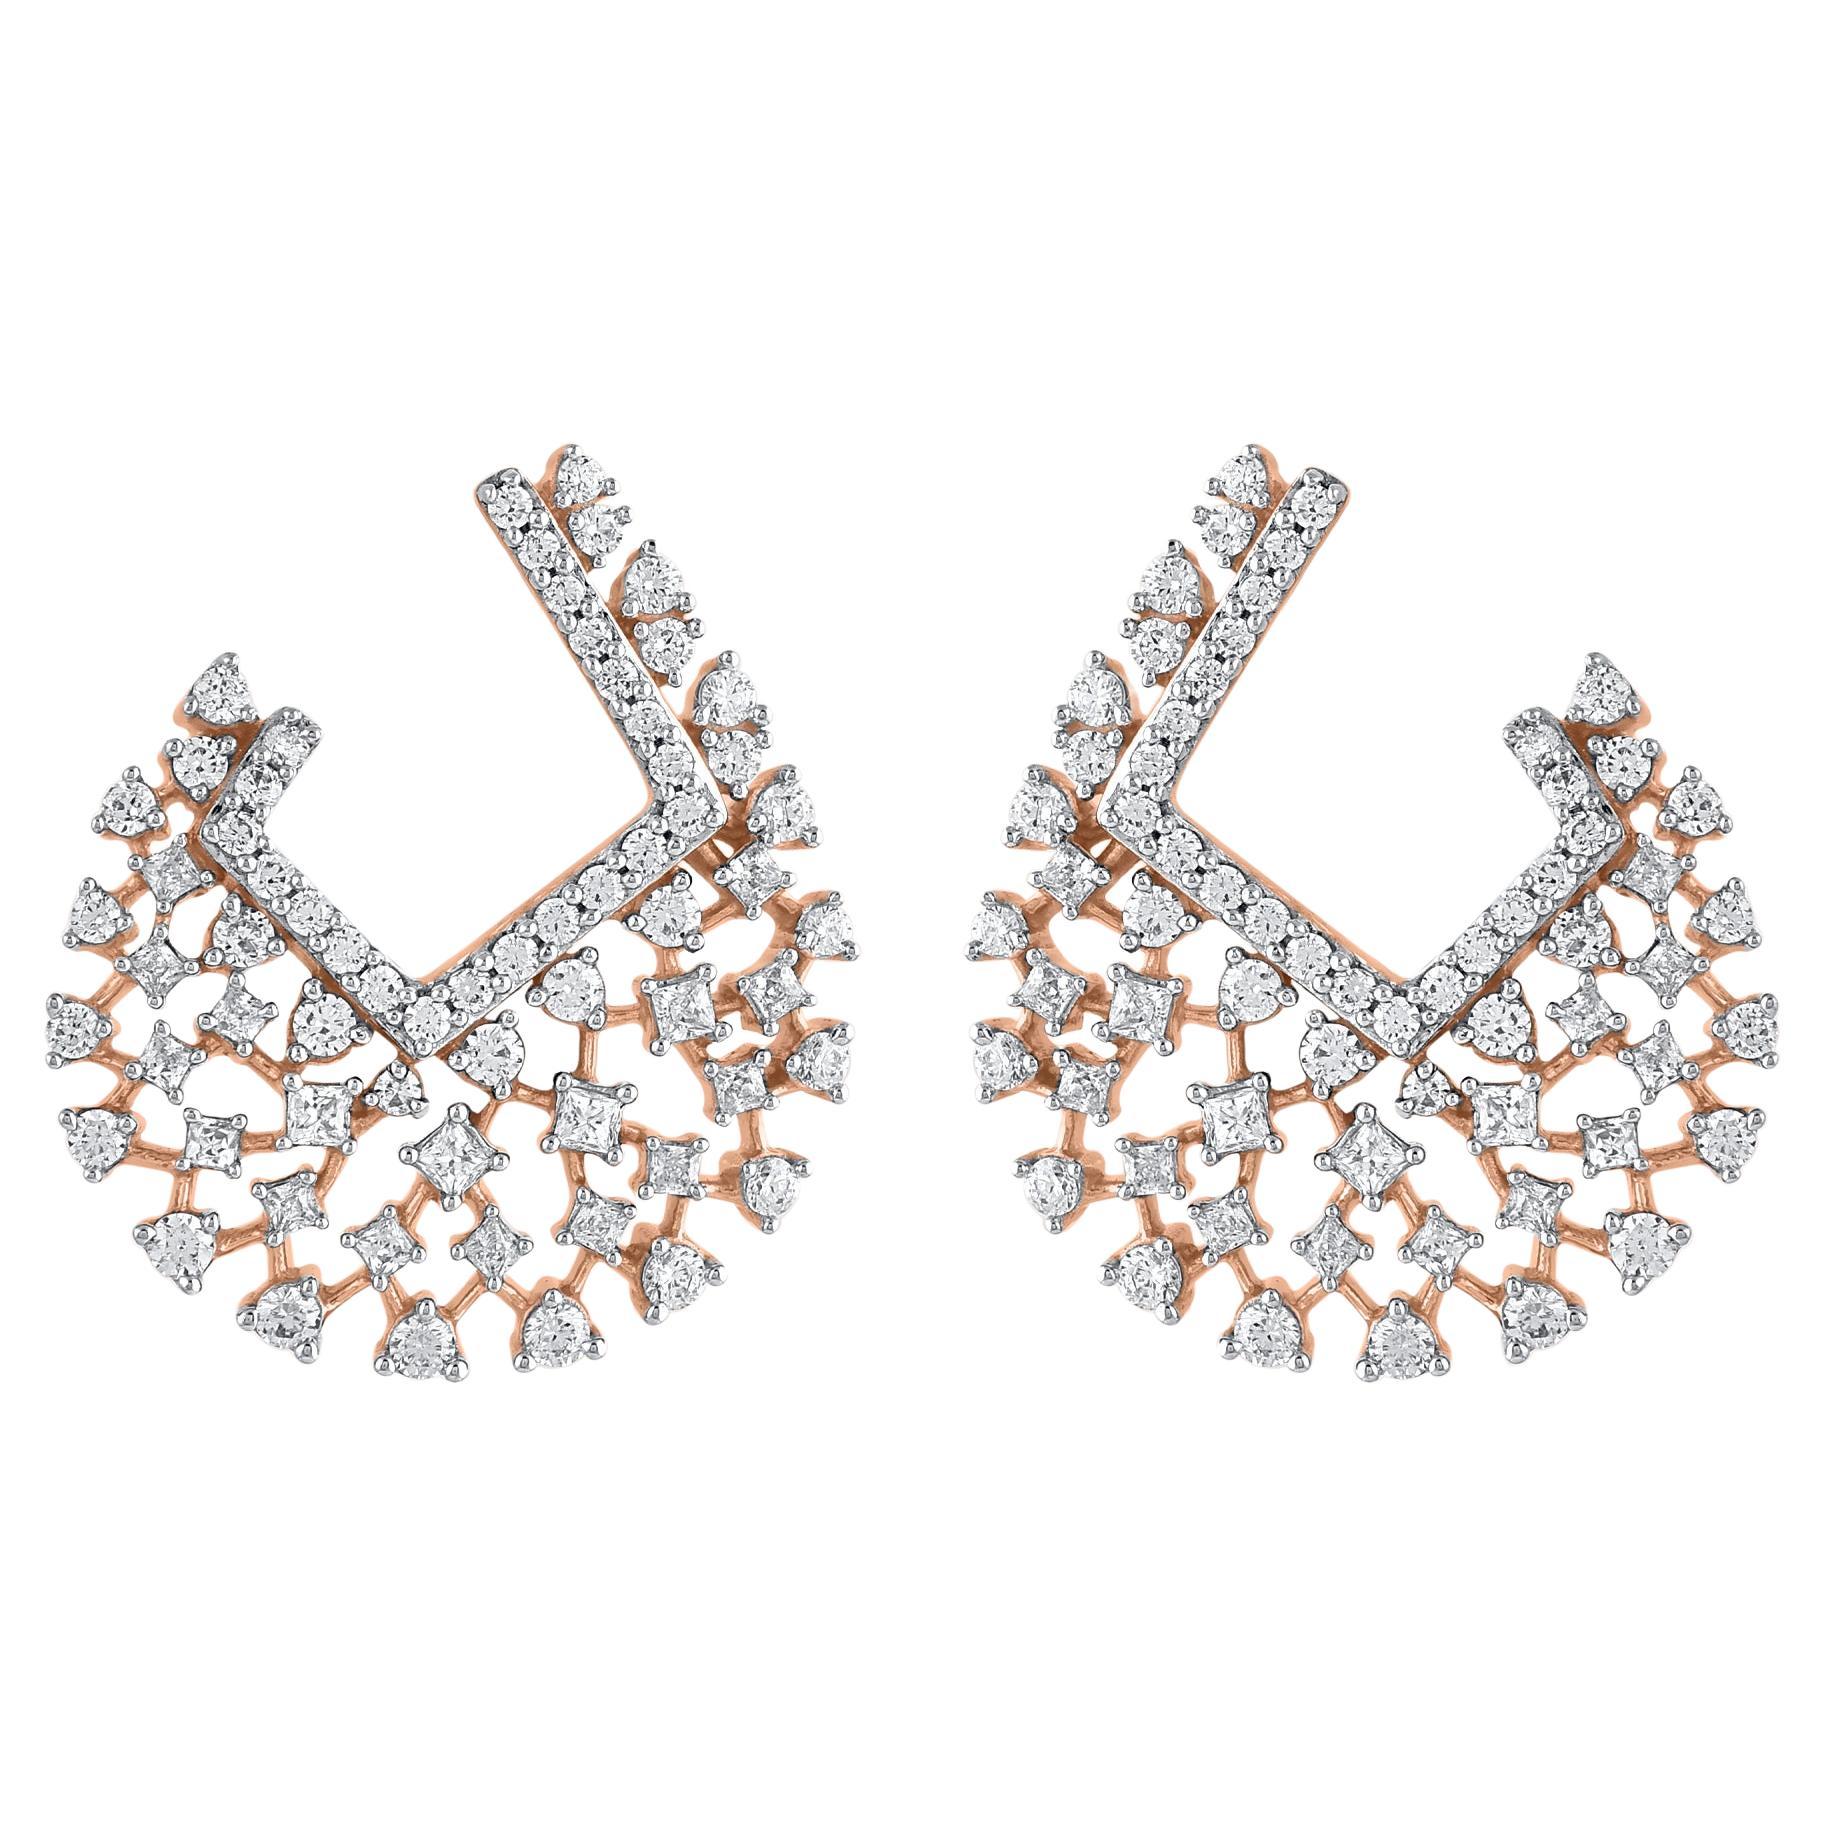 TJD 2.0 Carat Natural Diamonds Designer Stud Earrings in 18 Karat Rose Gold For Sale